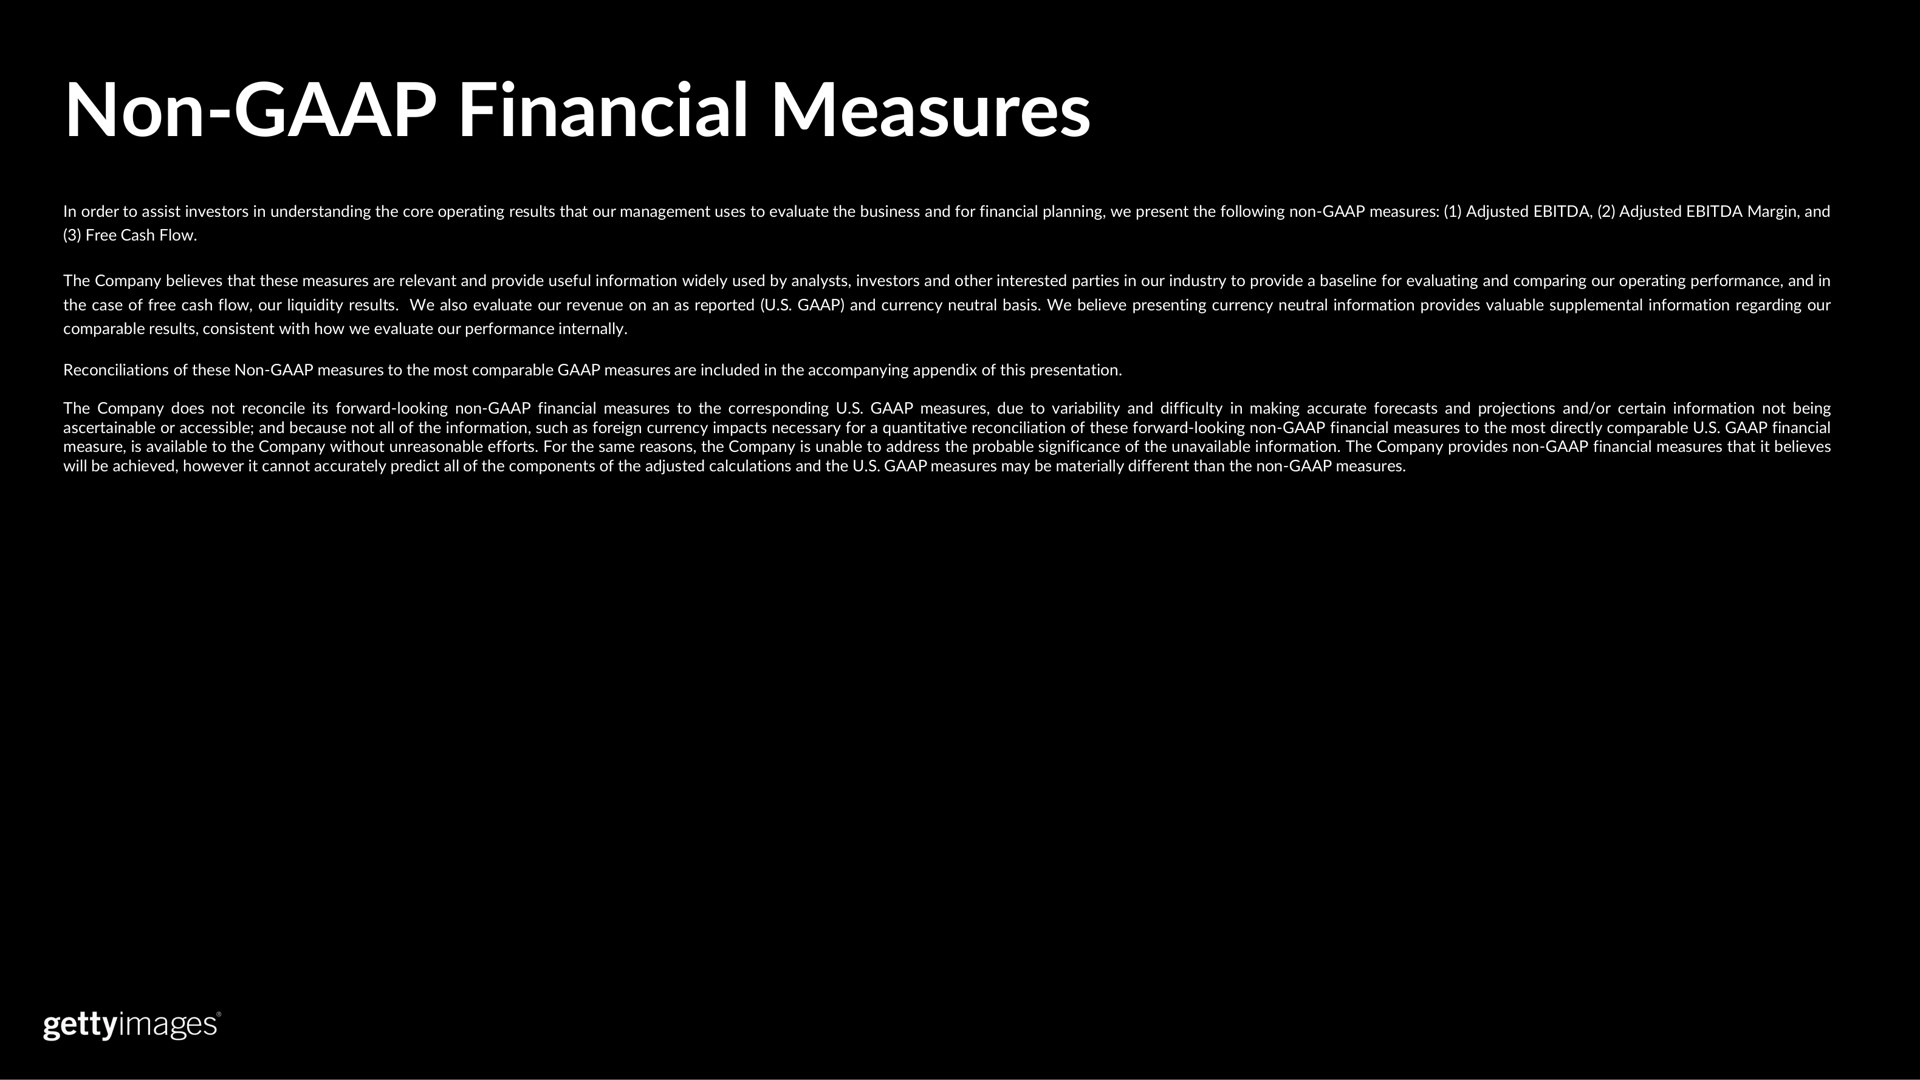 non financial measures | Getty